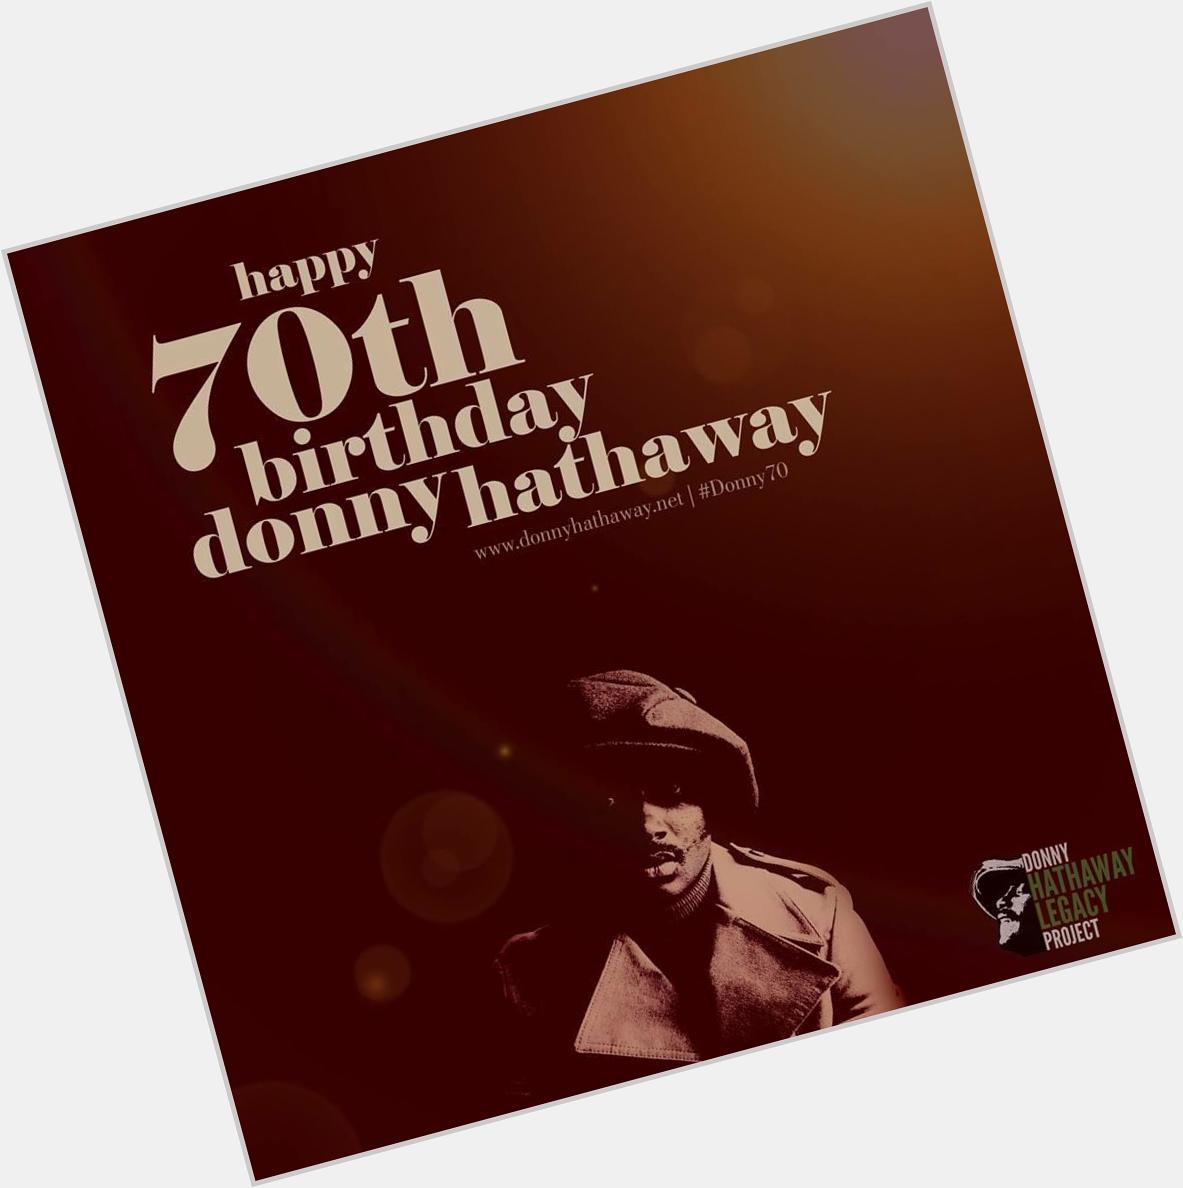 Happy 70th Birthday to Donny Hathaway  